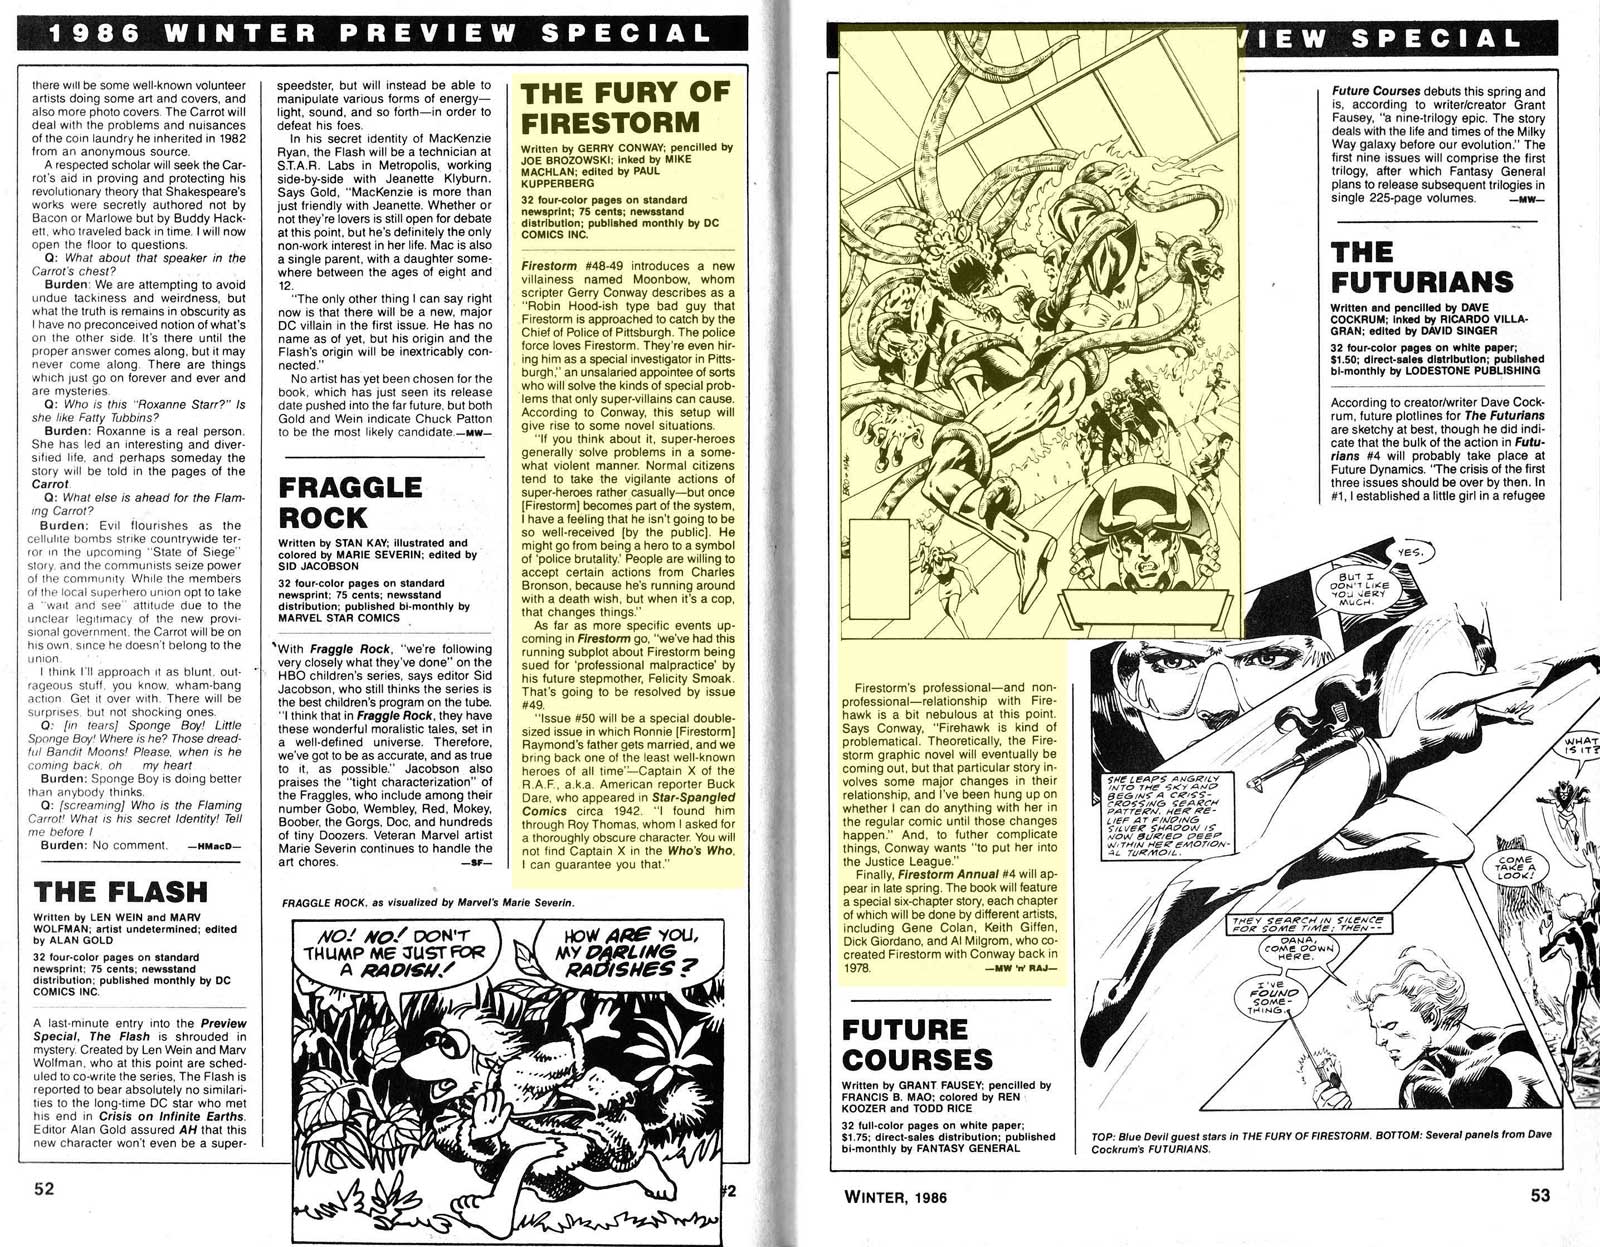 Amazing Heroes Preview Special #2 - Winter 1986 - Firestorm